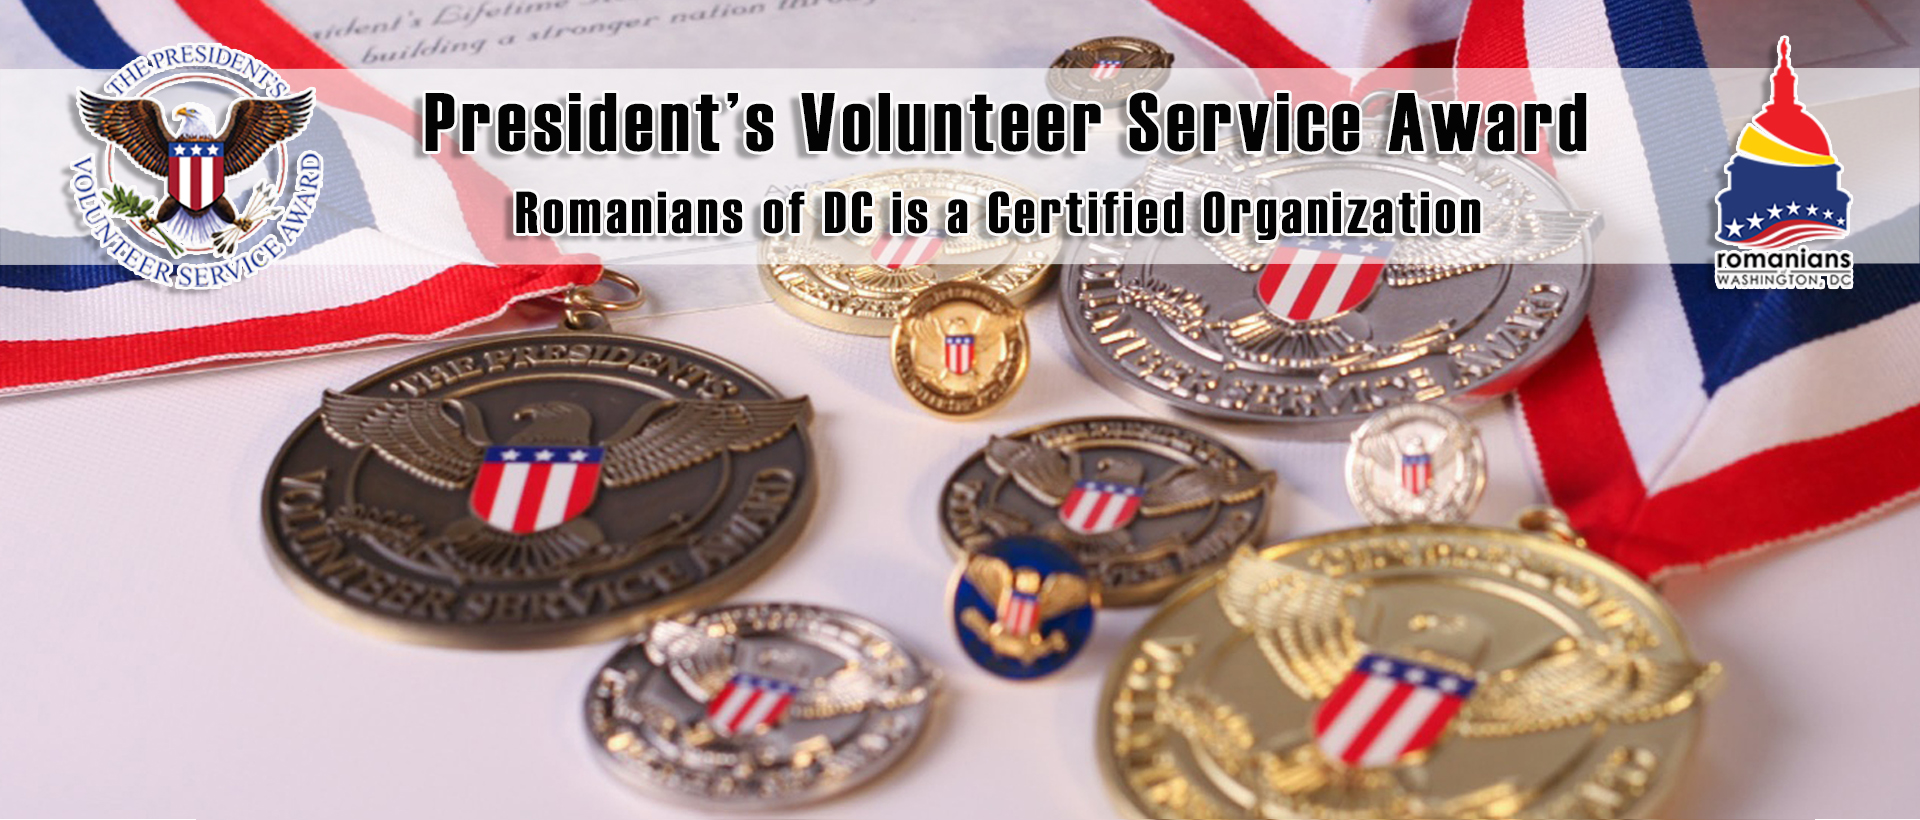 President’s Volunteer Service Award